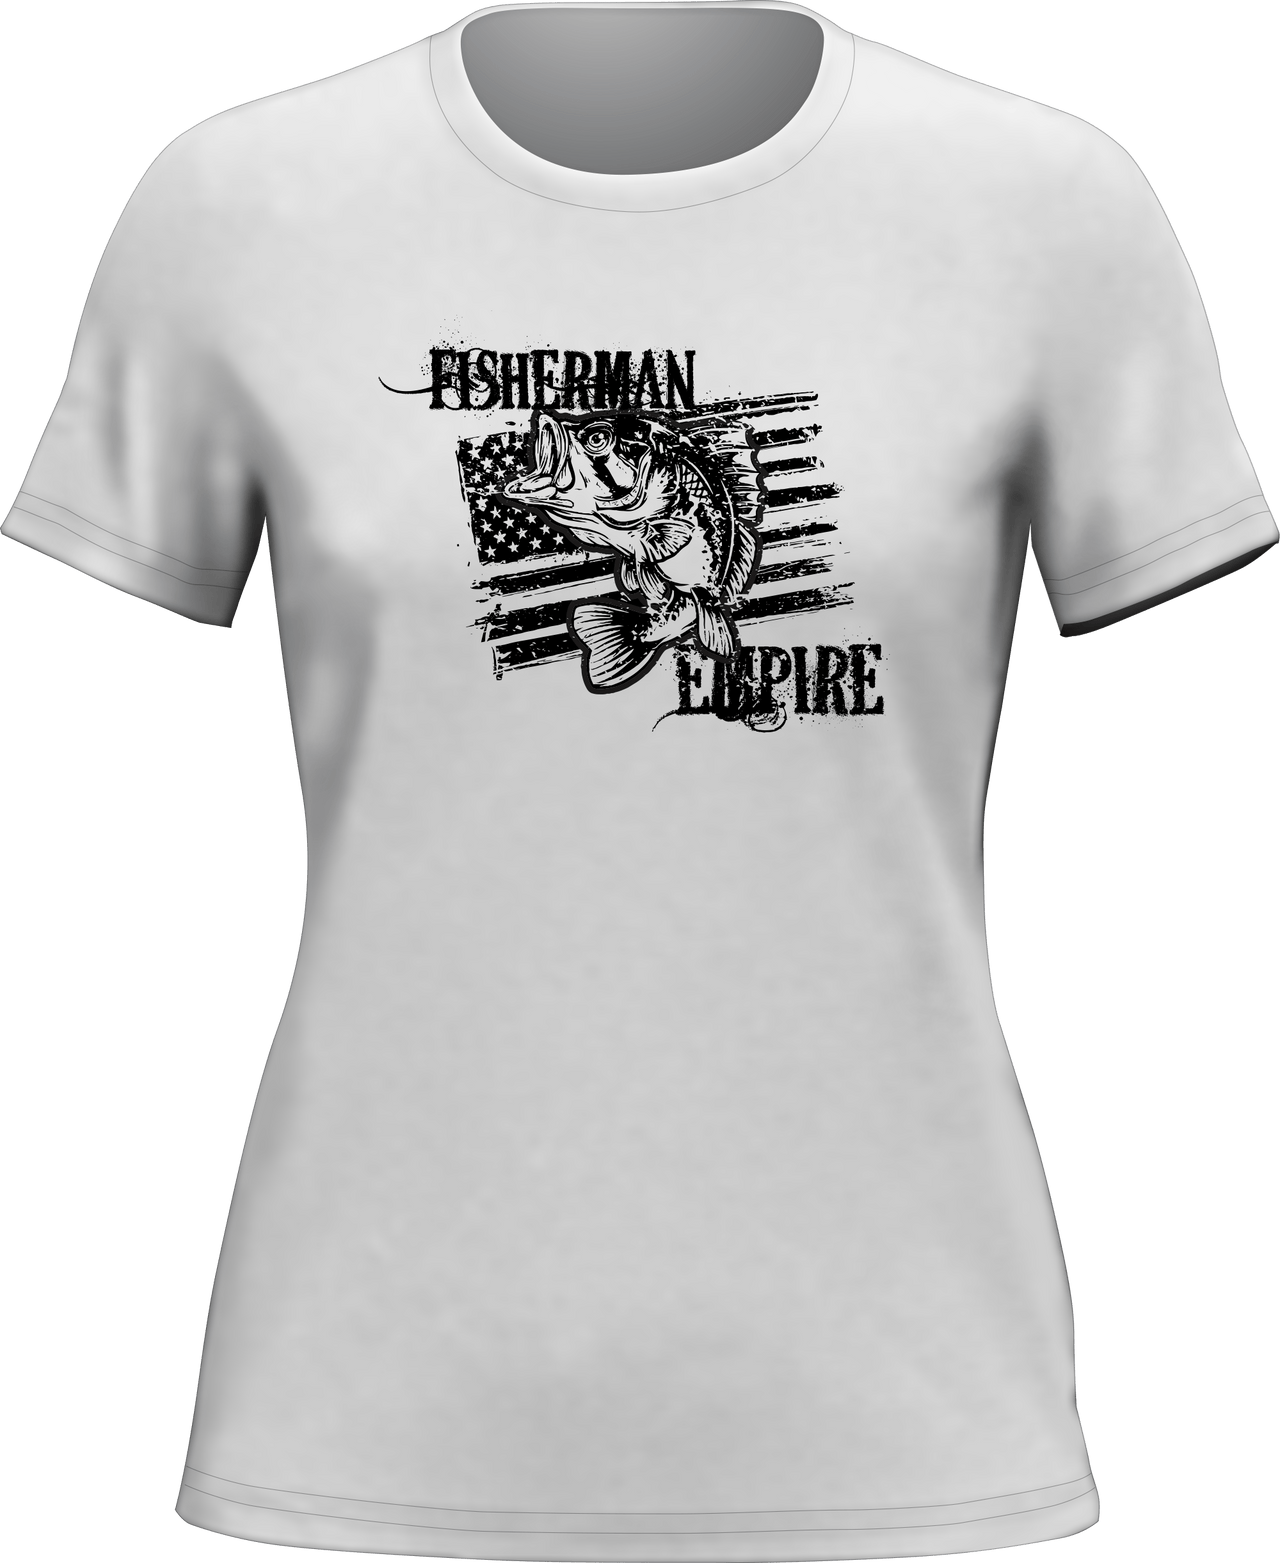 Fisherman Empire T-Shirt for Women